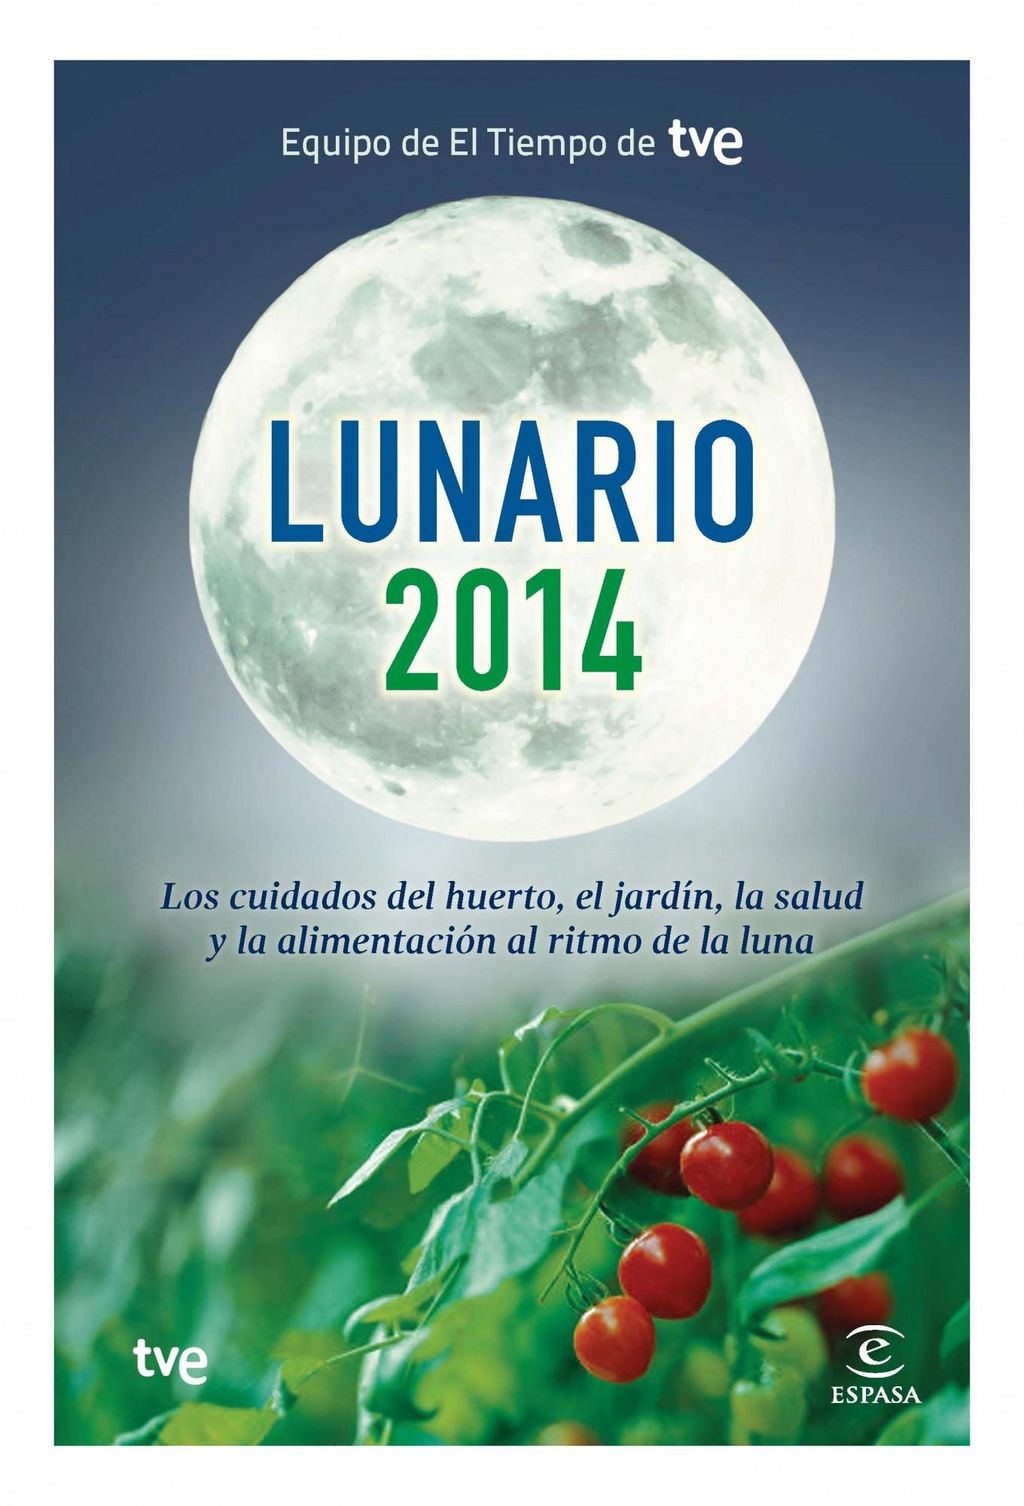 Lunario 2014